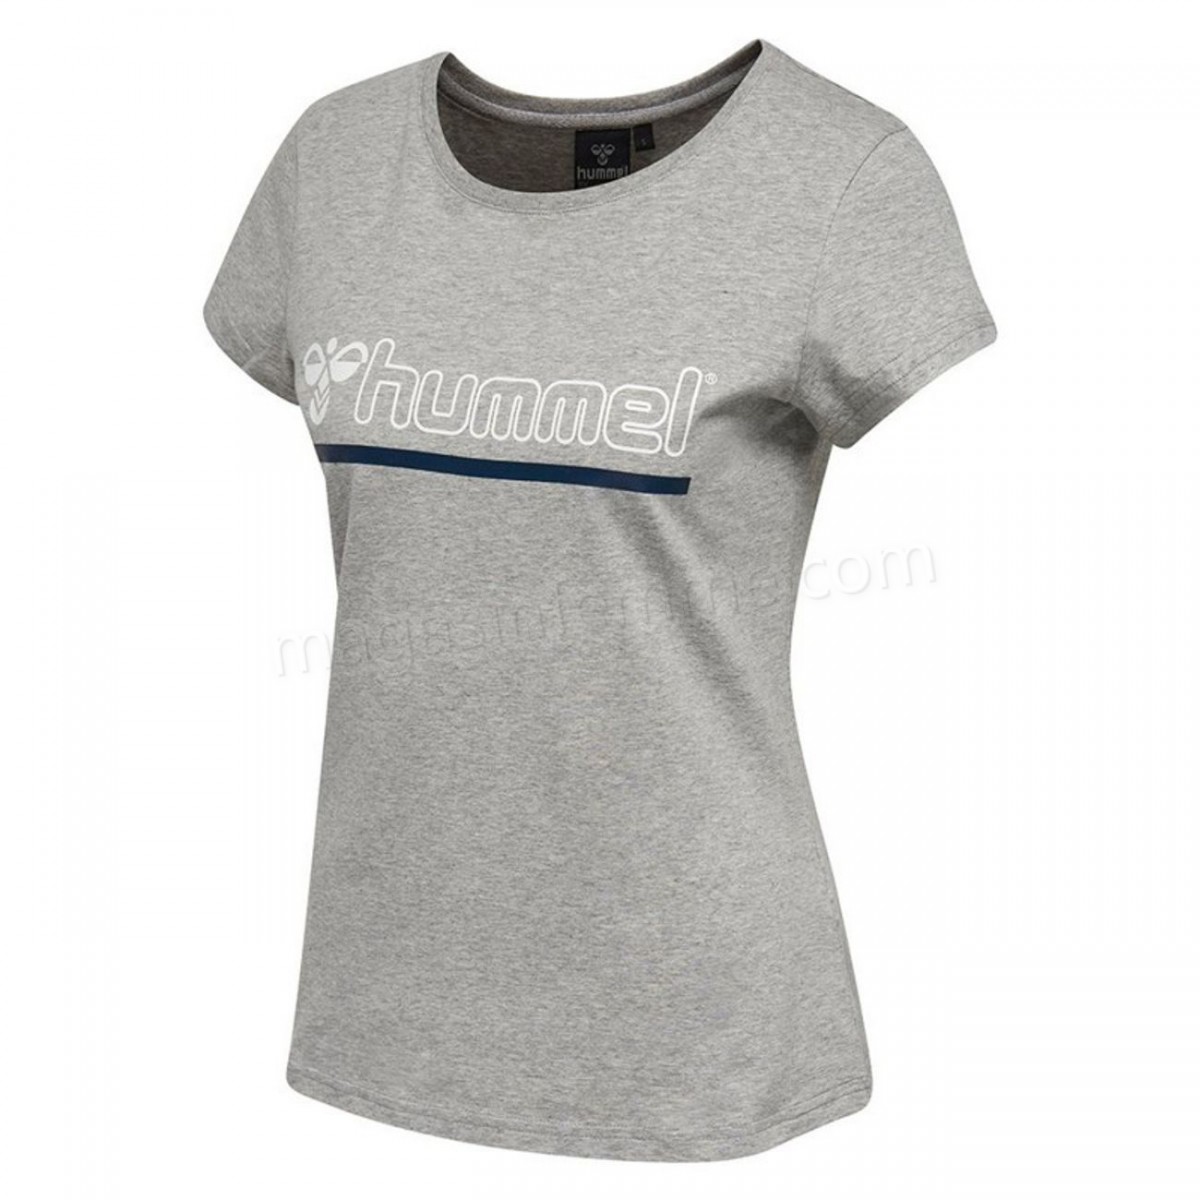 Hummel-Fitness femme HUMMEL T-shirt femme Hummel Classic bee Perla en solde - -0